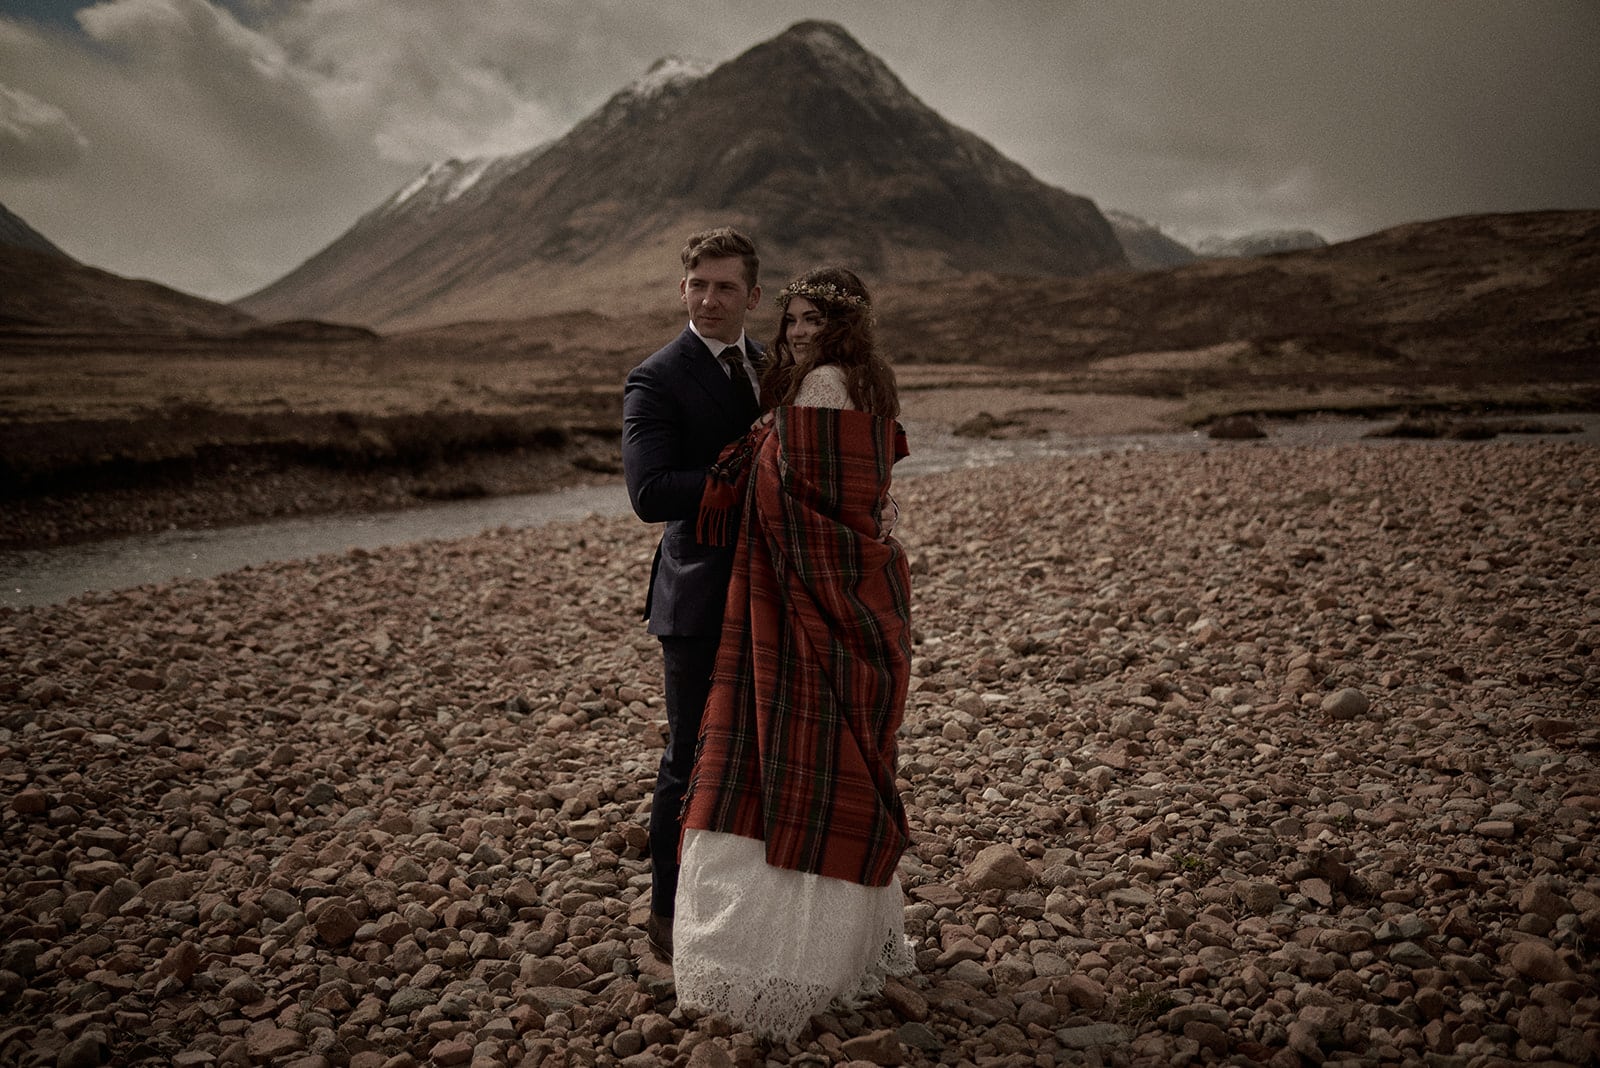 bex-tom-ceremony-scottish-highlands-glencoe-elopement-adventure-mountain-intimate-ceremony-elope-scotland